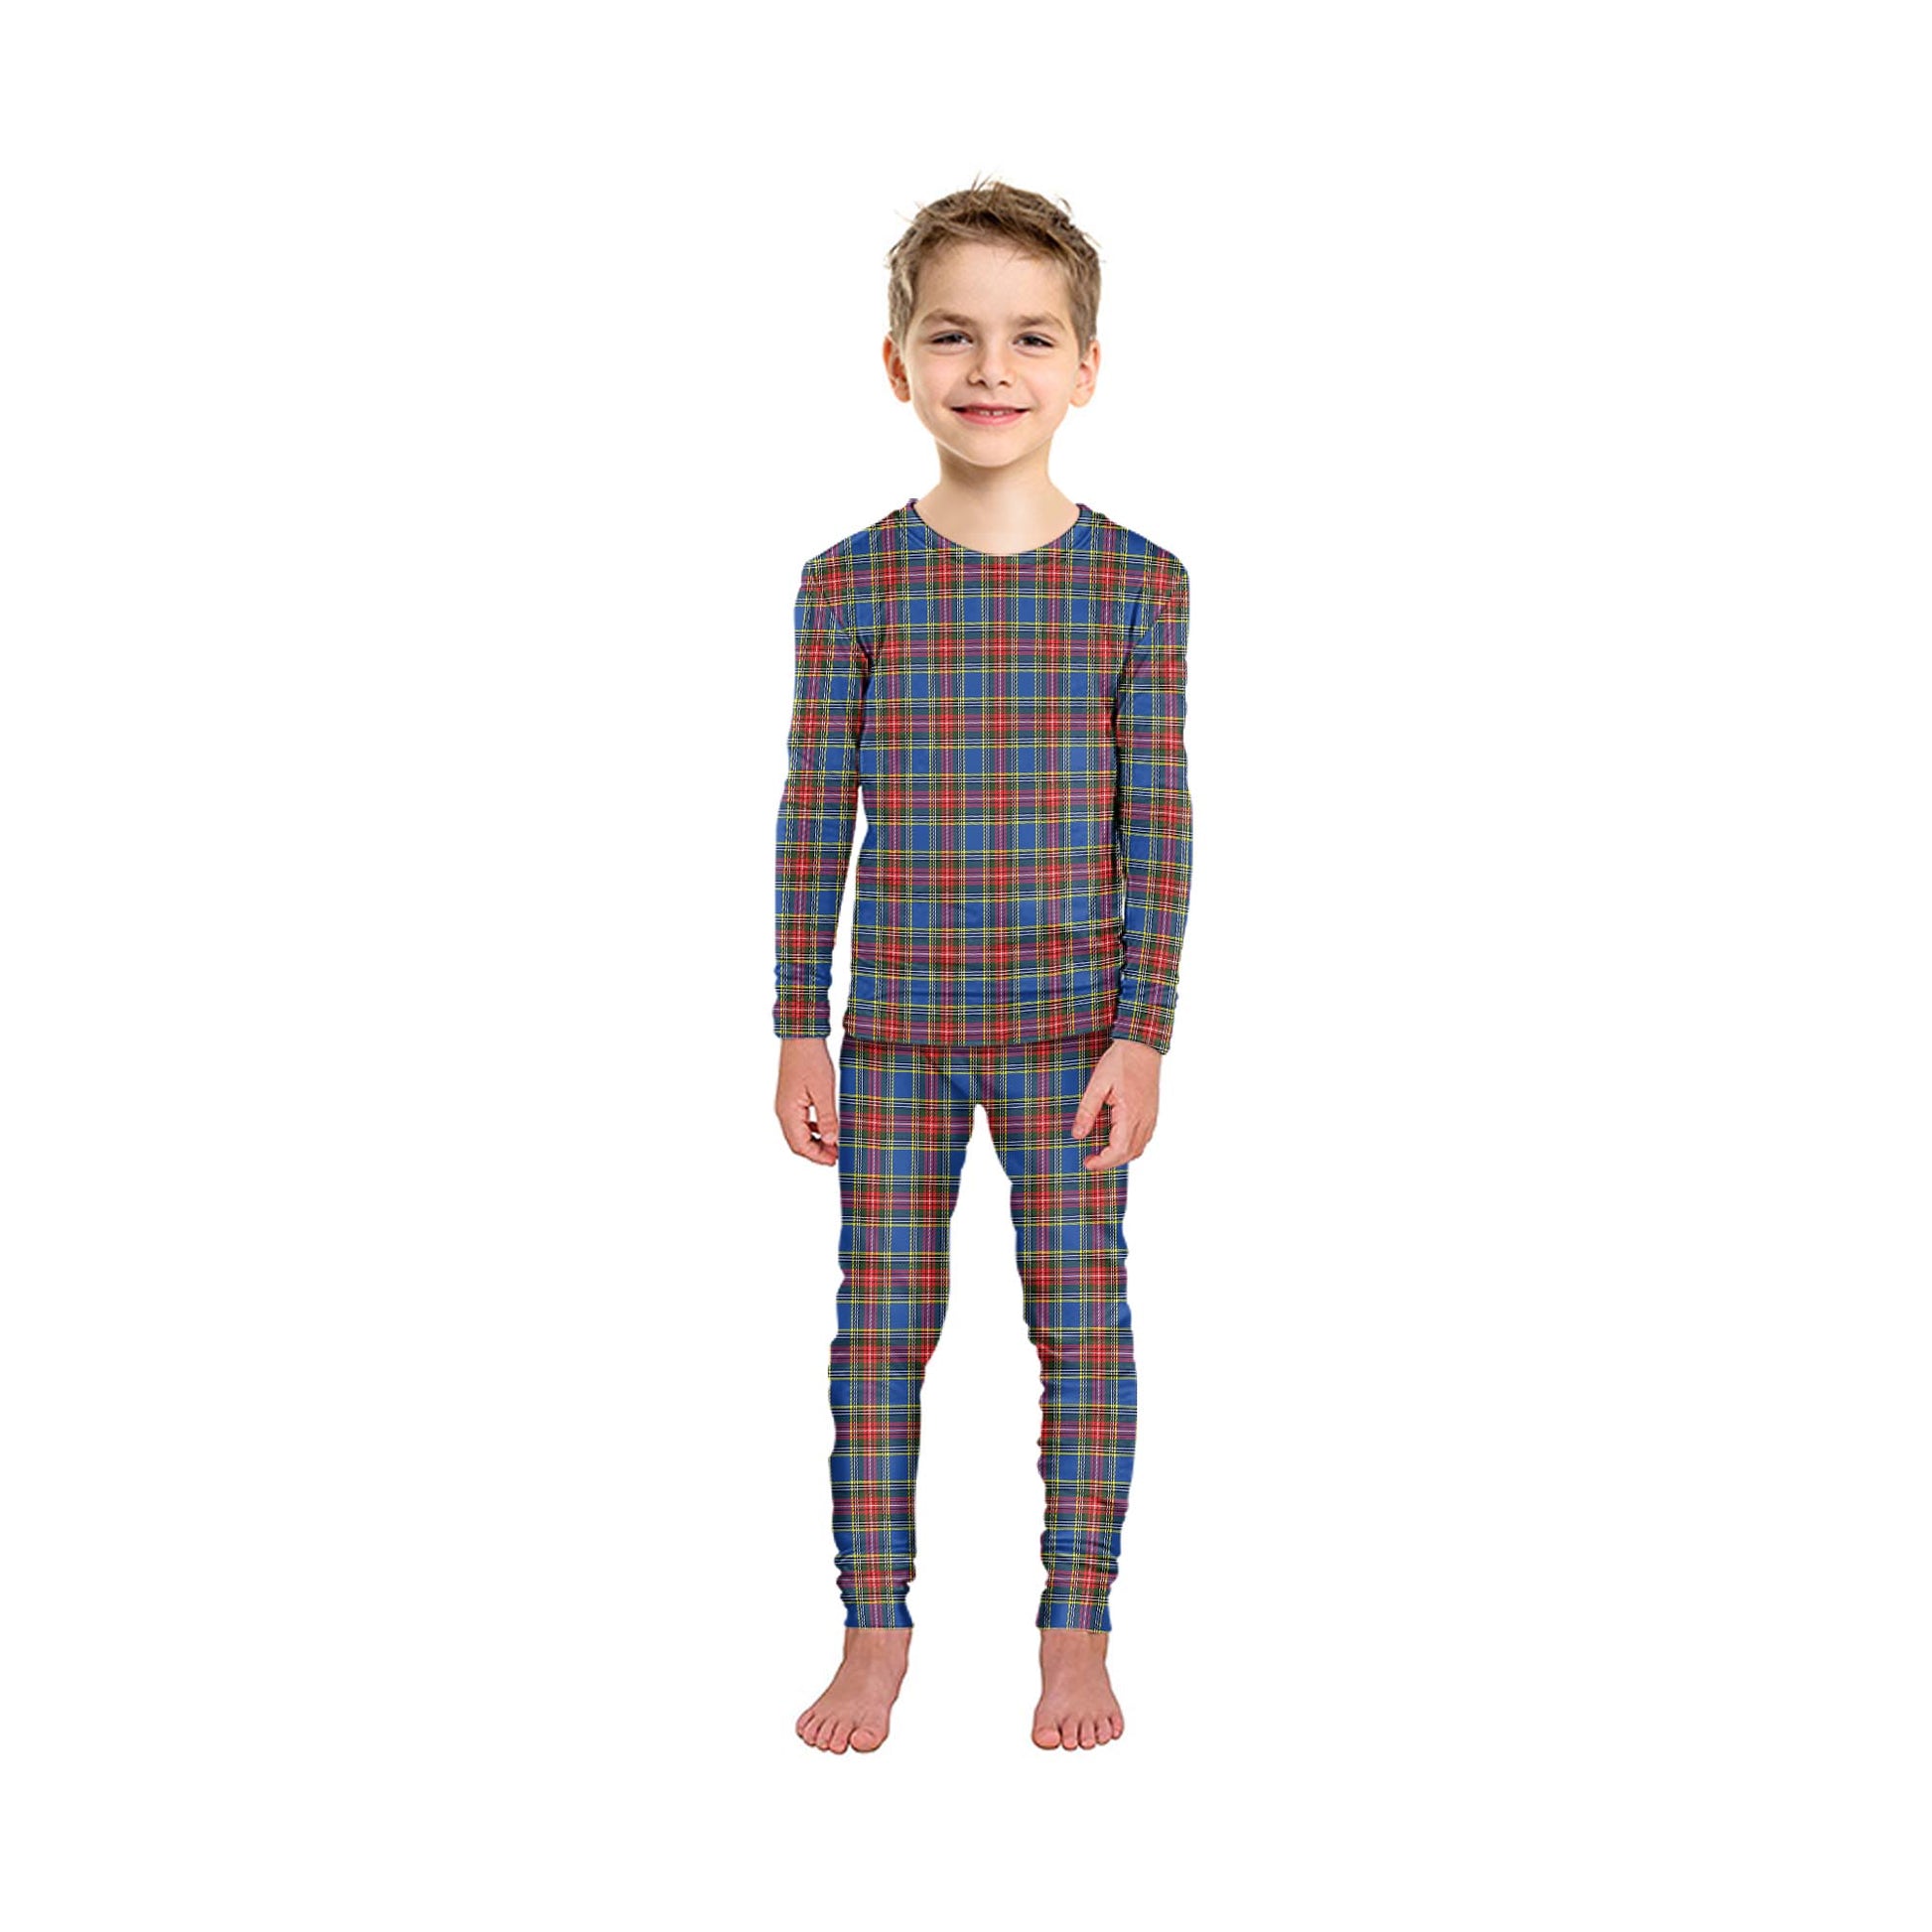 MacBeth Tartan Pajamas Family Set - Tartanvibesclothing